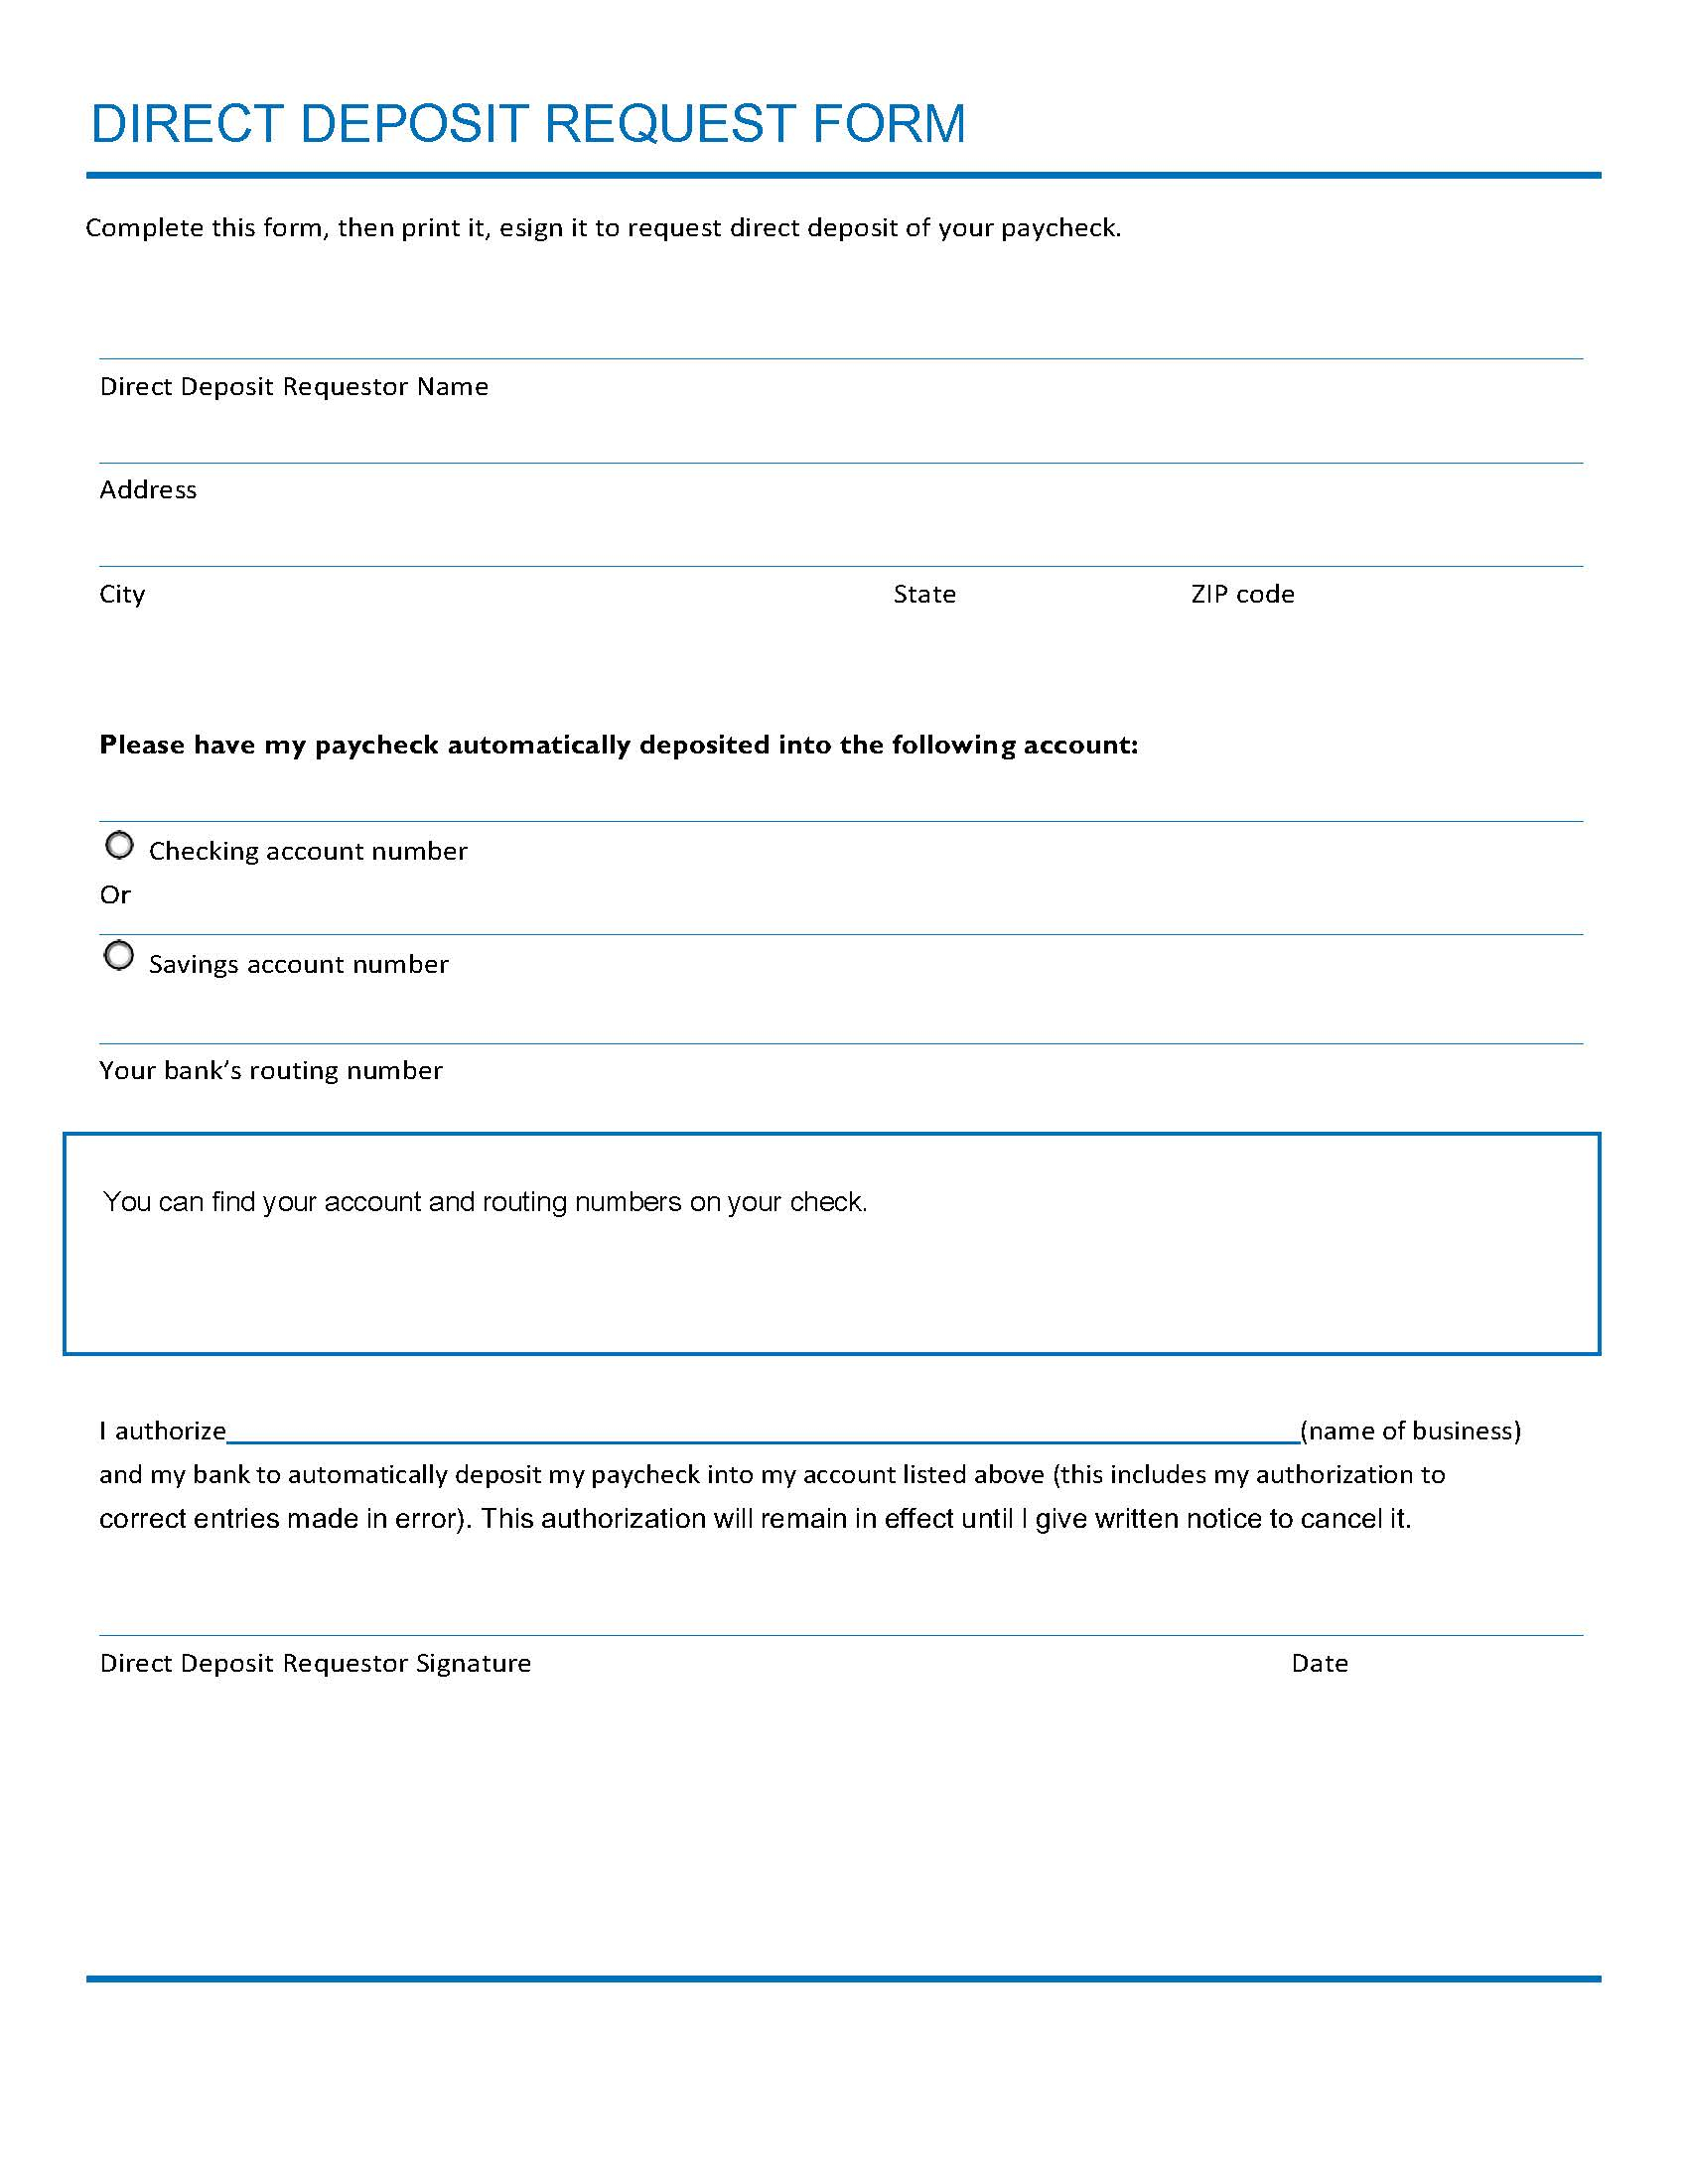 Blank Direct Deposit Enrollment Form Online  eSign Genie Throughout Direct Deposit Request Form Template For Direct Deposit Request Form Template